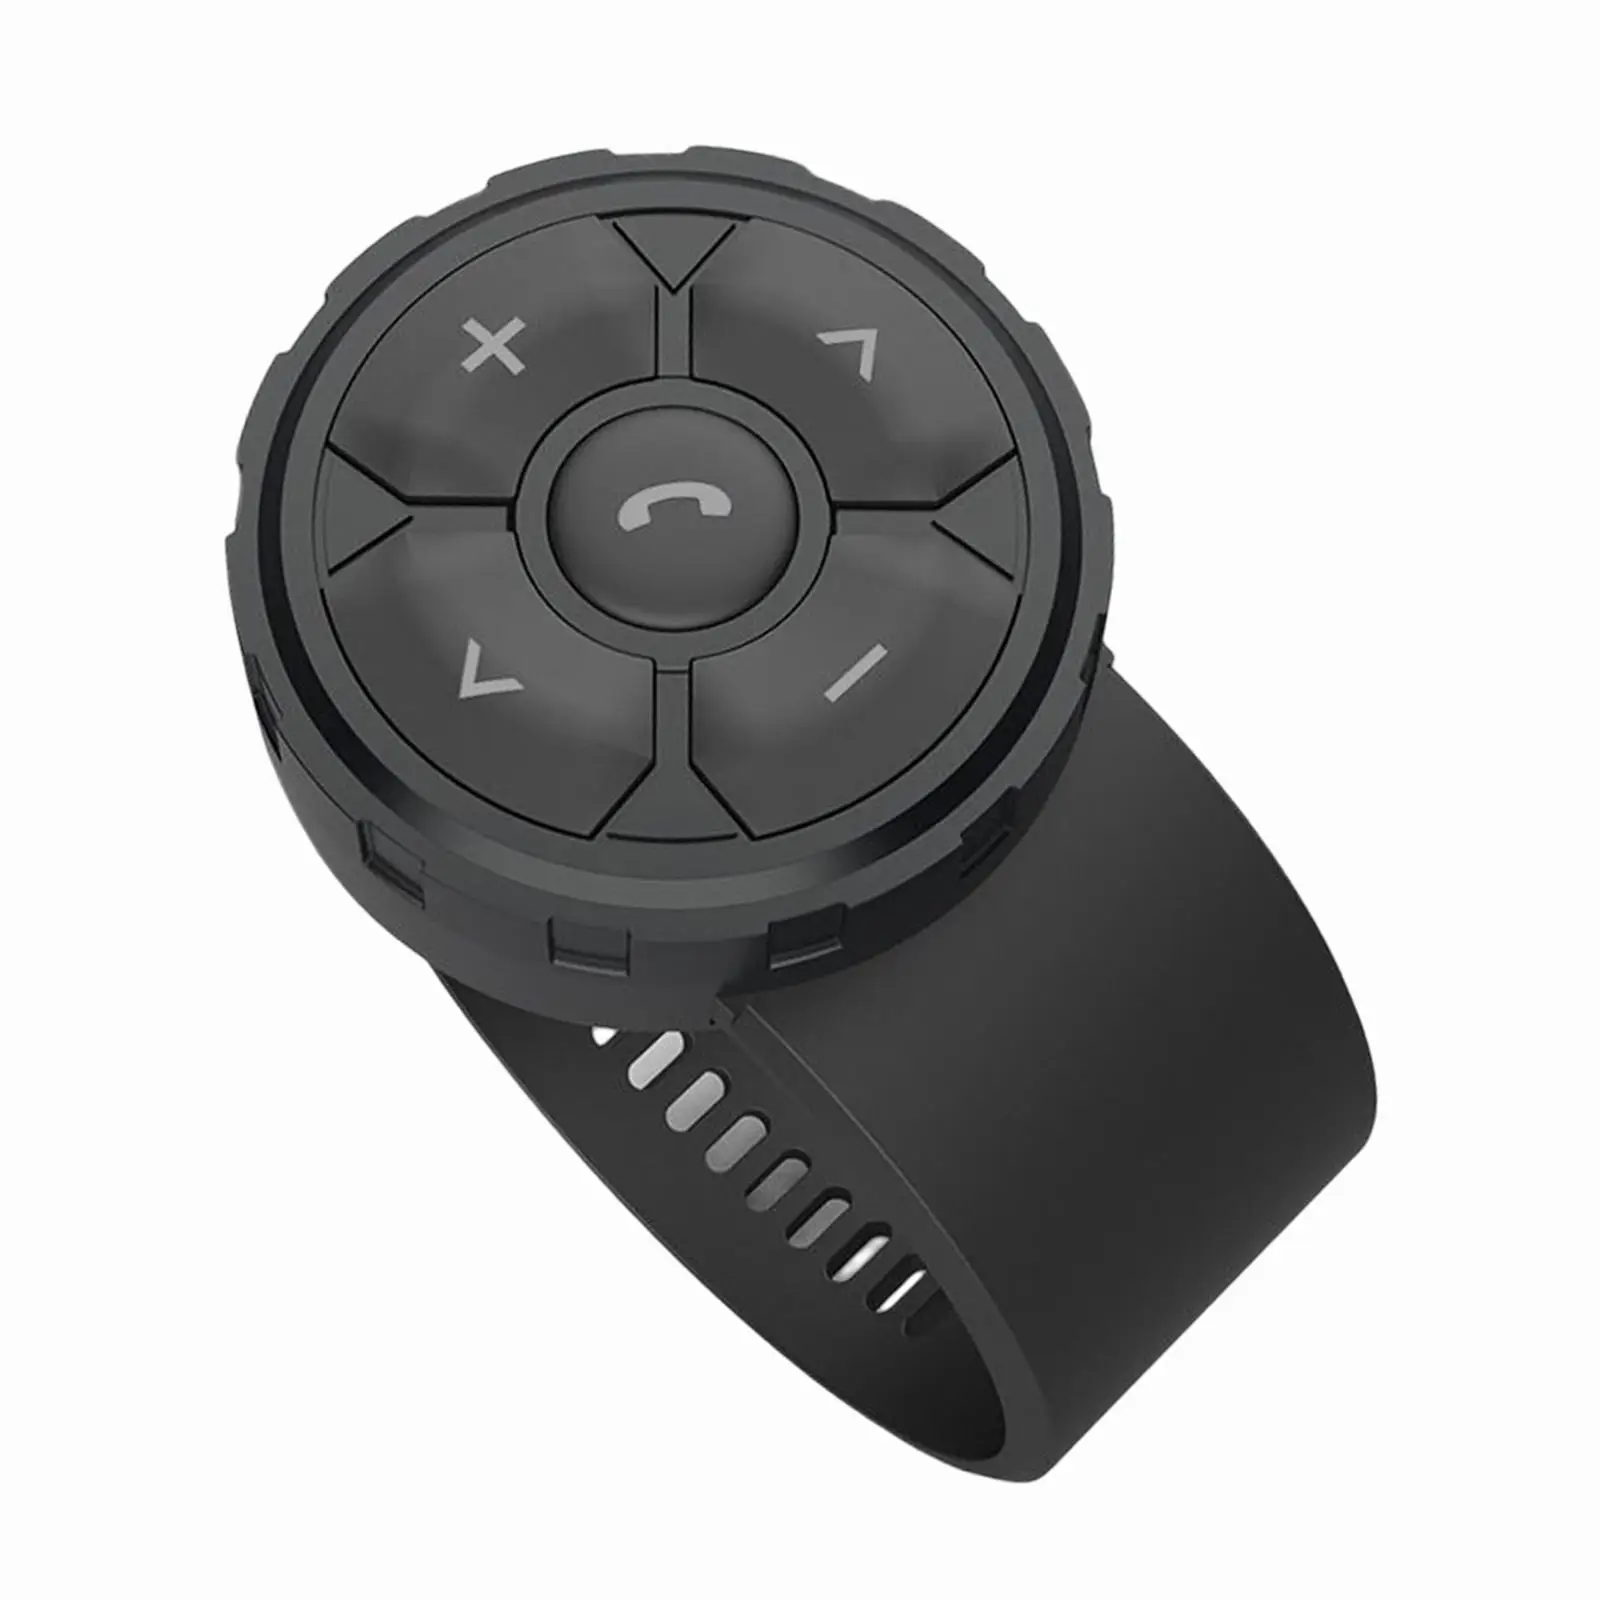 Steering Wheel Remote Control Button Kit Controller Waterproof for Bike Motorbike